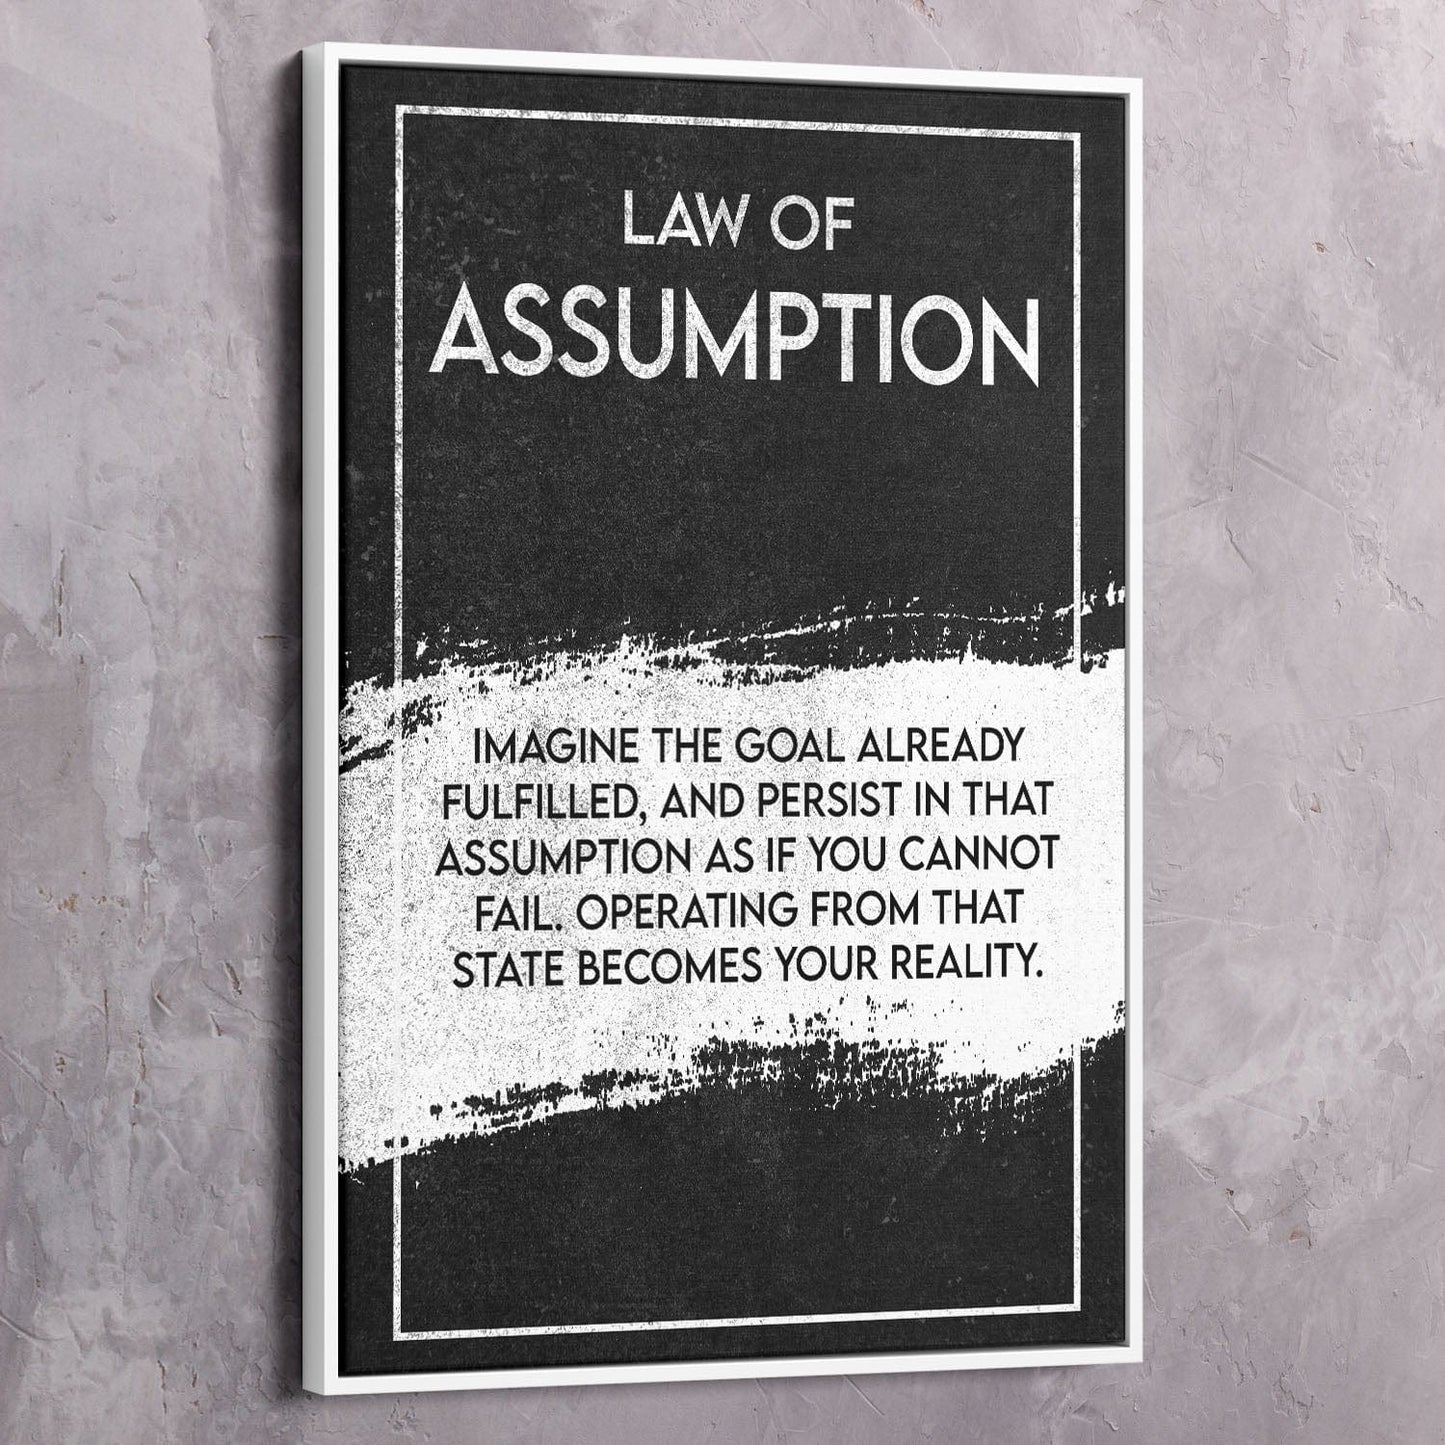 Law of Assumption - Neville Goddard Inspired Wall Art | Inspirational Wall Art Motivational Wall Art Quotes Office Art | ImpaktMaker Exclusive Canvas Art Portrait